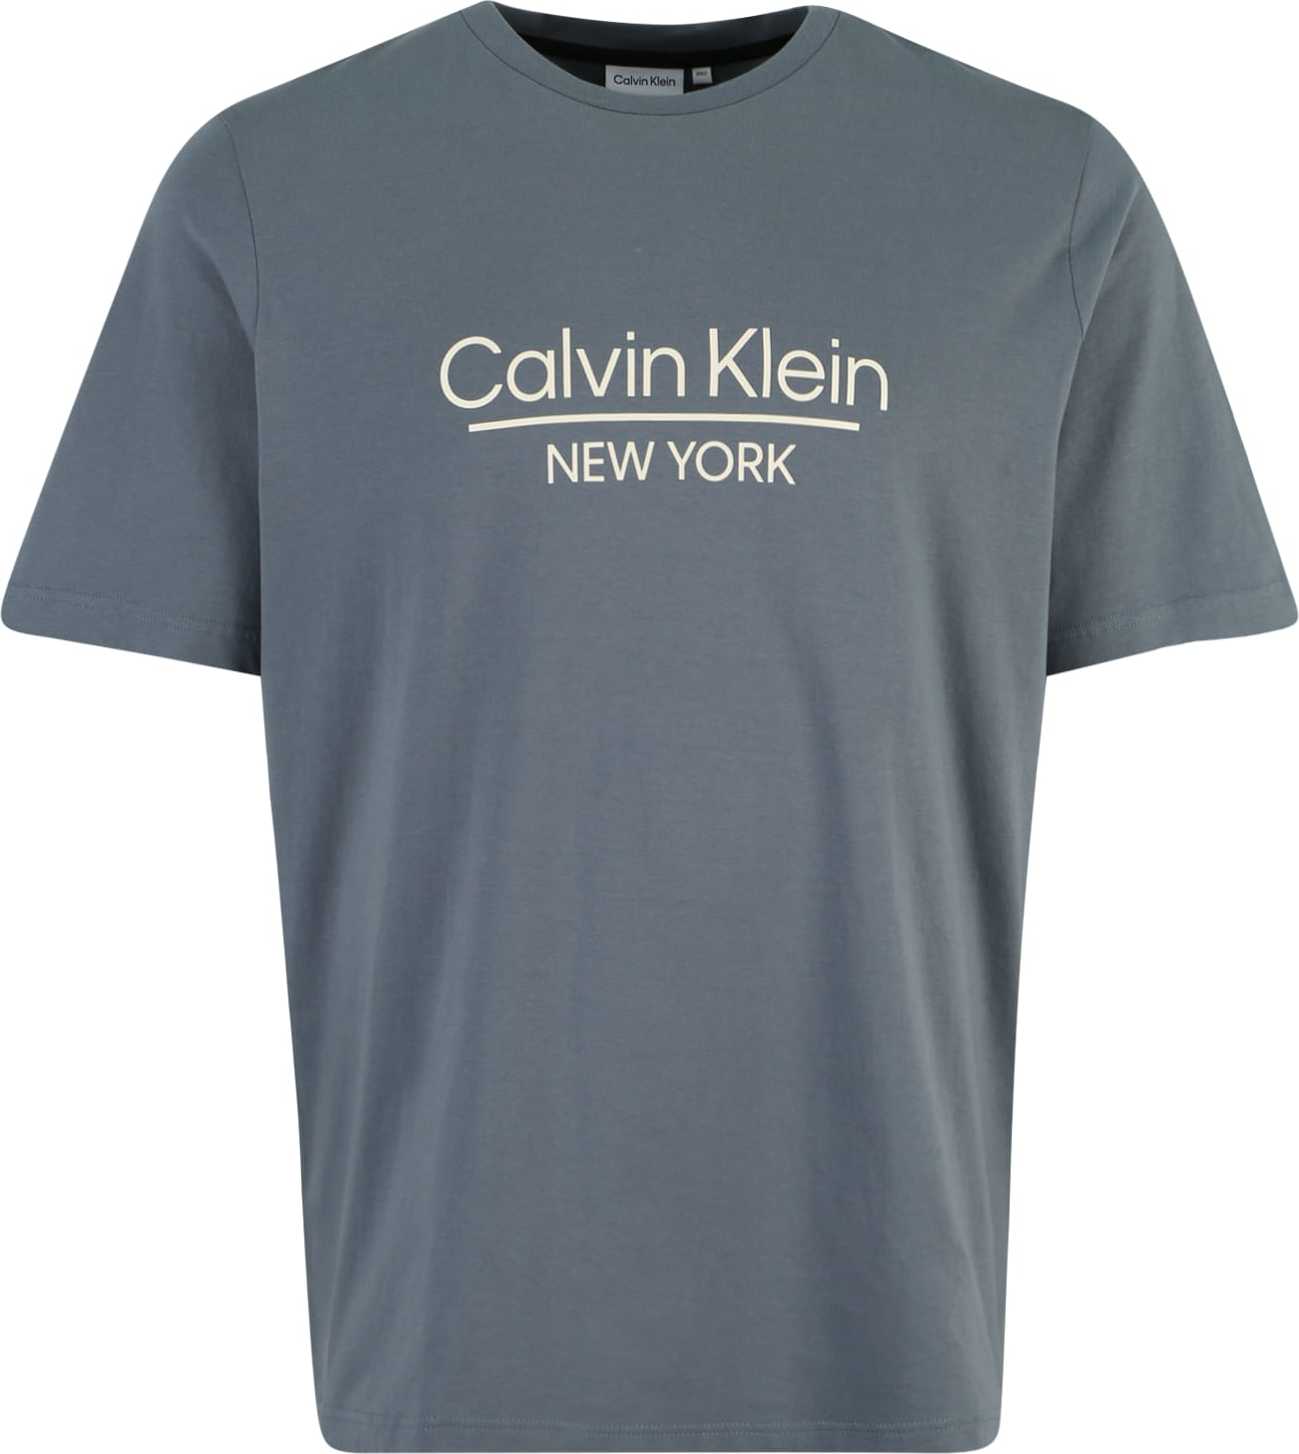 Tričko Calvin Klein Big & Tall tmavě šedá / bílá